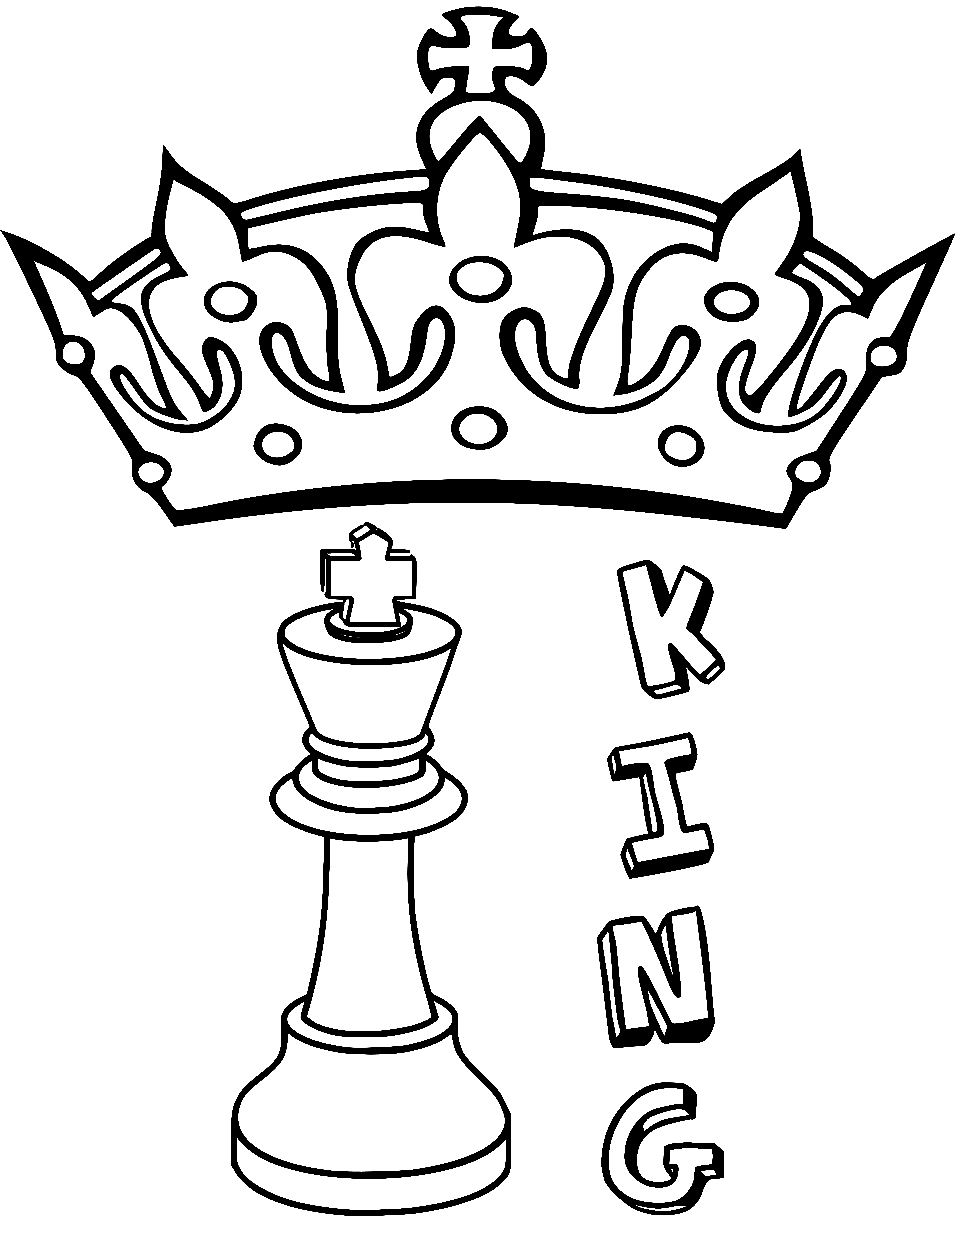 10 Desenhos do Rei do Xadrez para Imprimir e Colorir